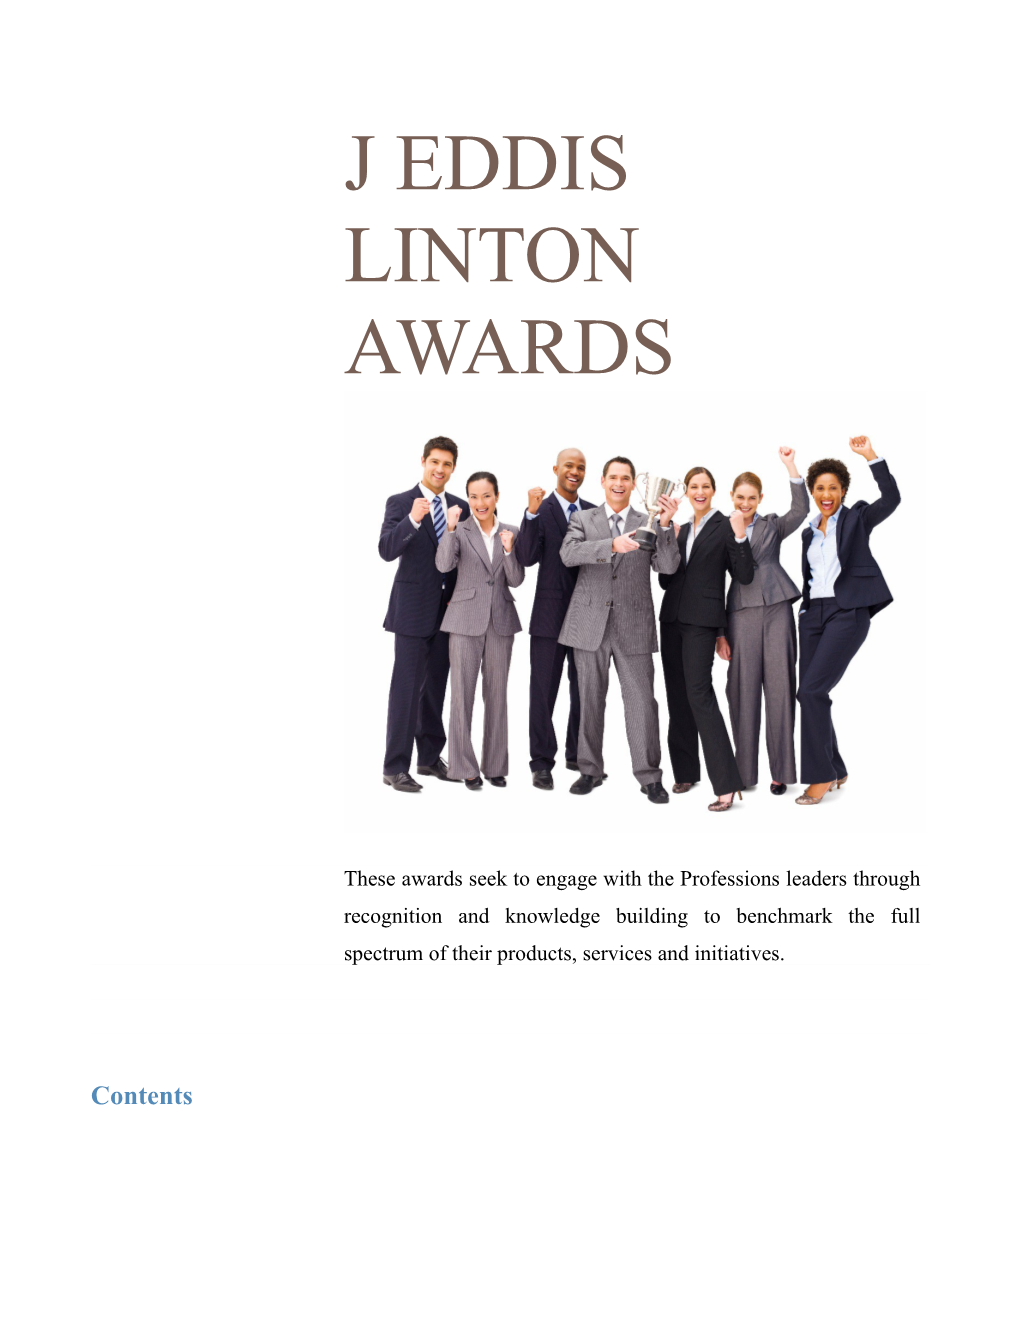 J Eddis Linton Awards